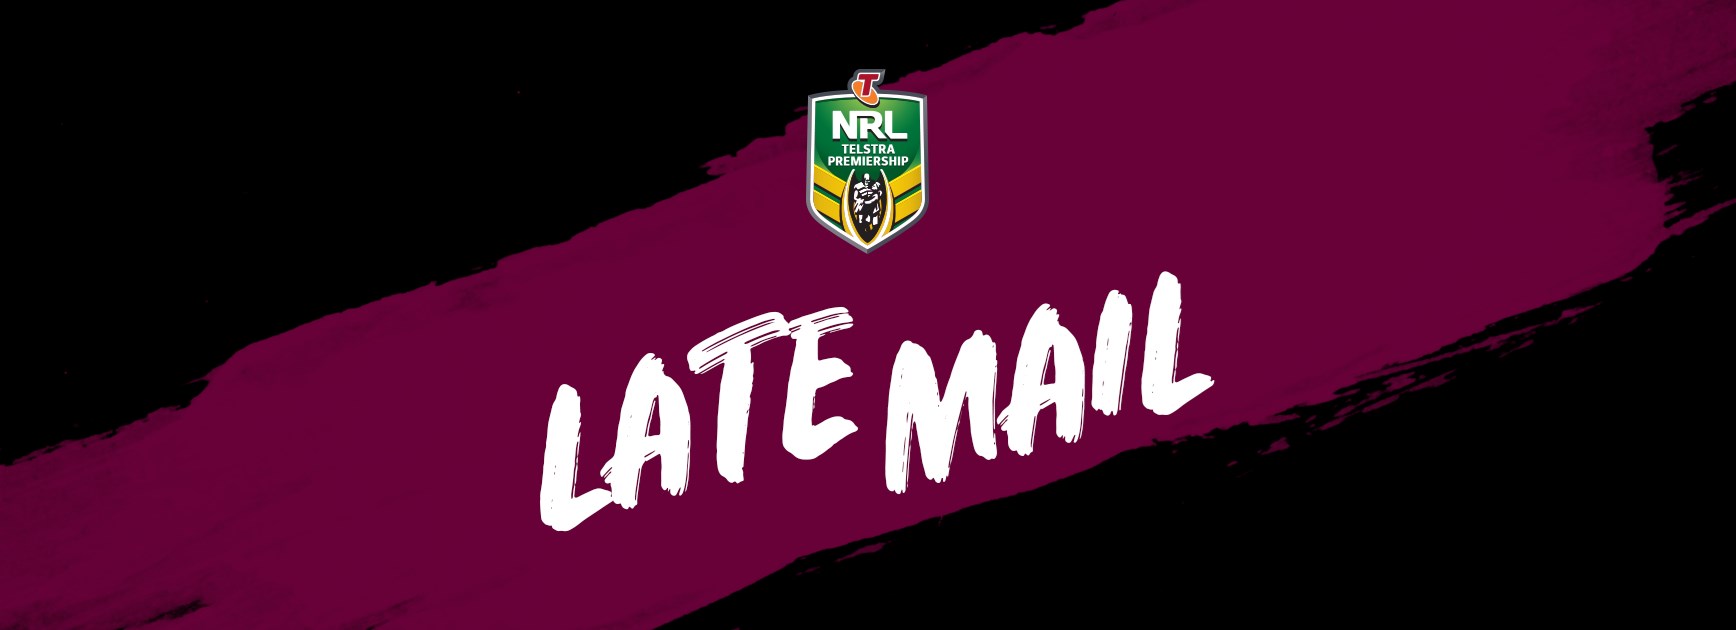 NRL Late Mail - Round 9